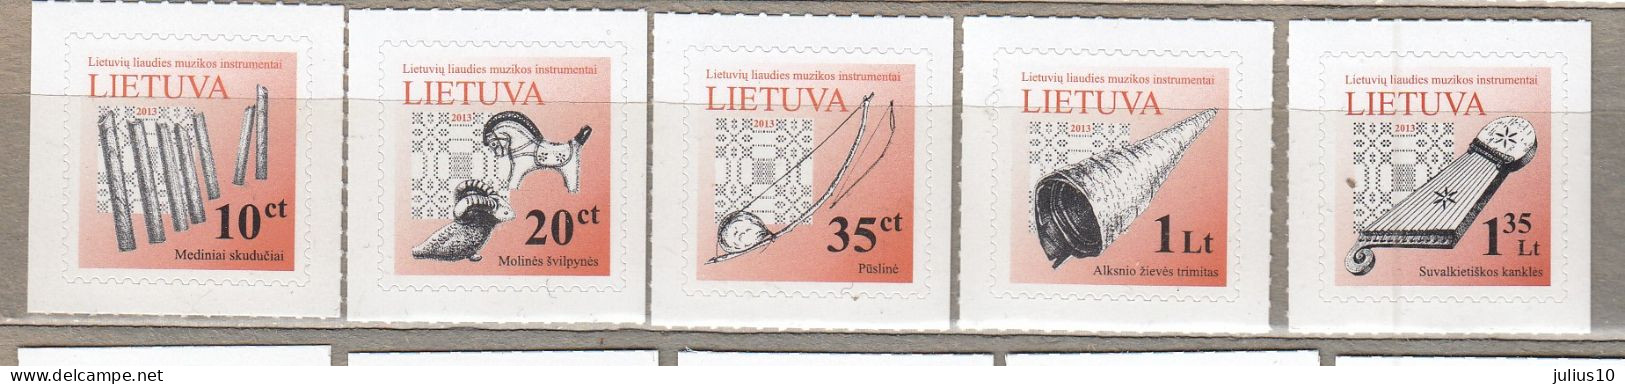 LITHUANIA 2013 Folk Instruments Self Adhesive MNH(**) Mi 1087 II- 1091 II #Lt873 - Lithuania